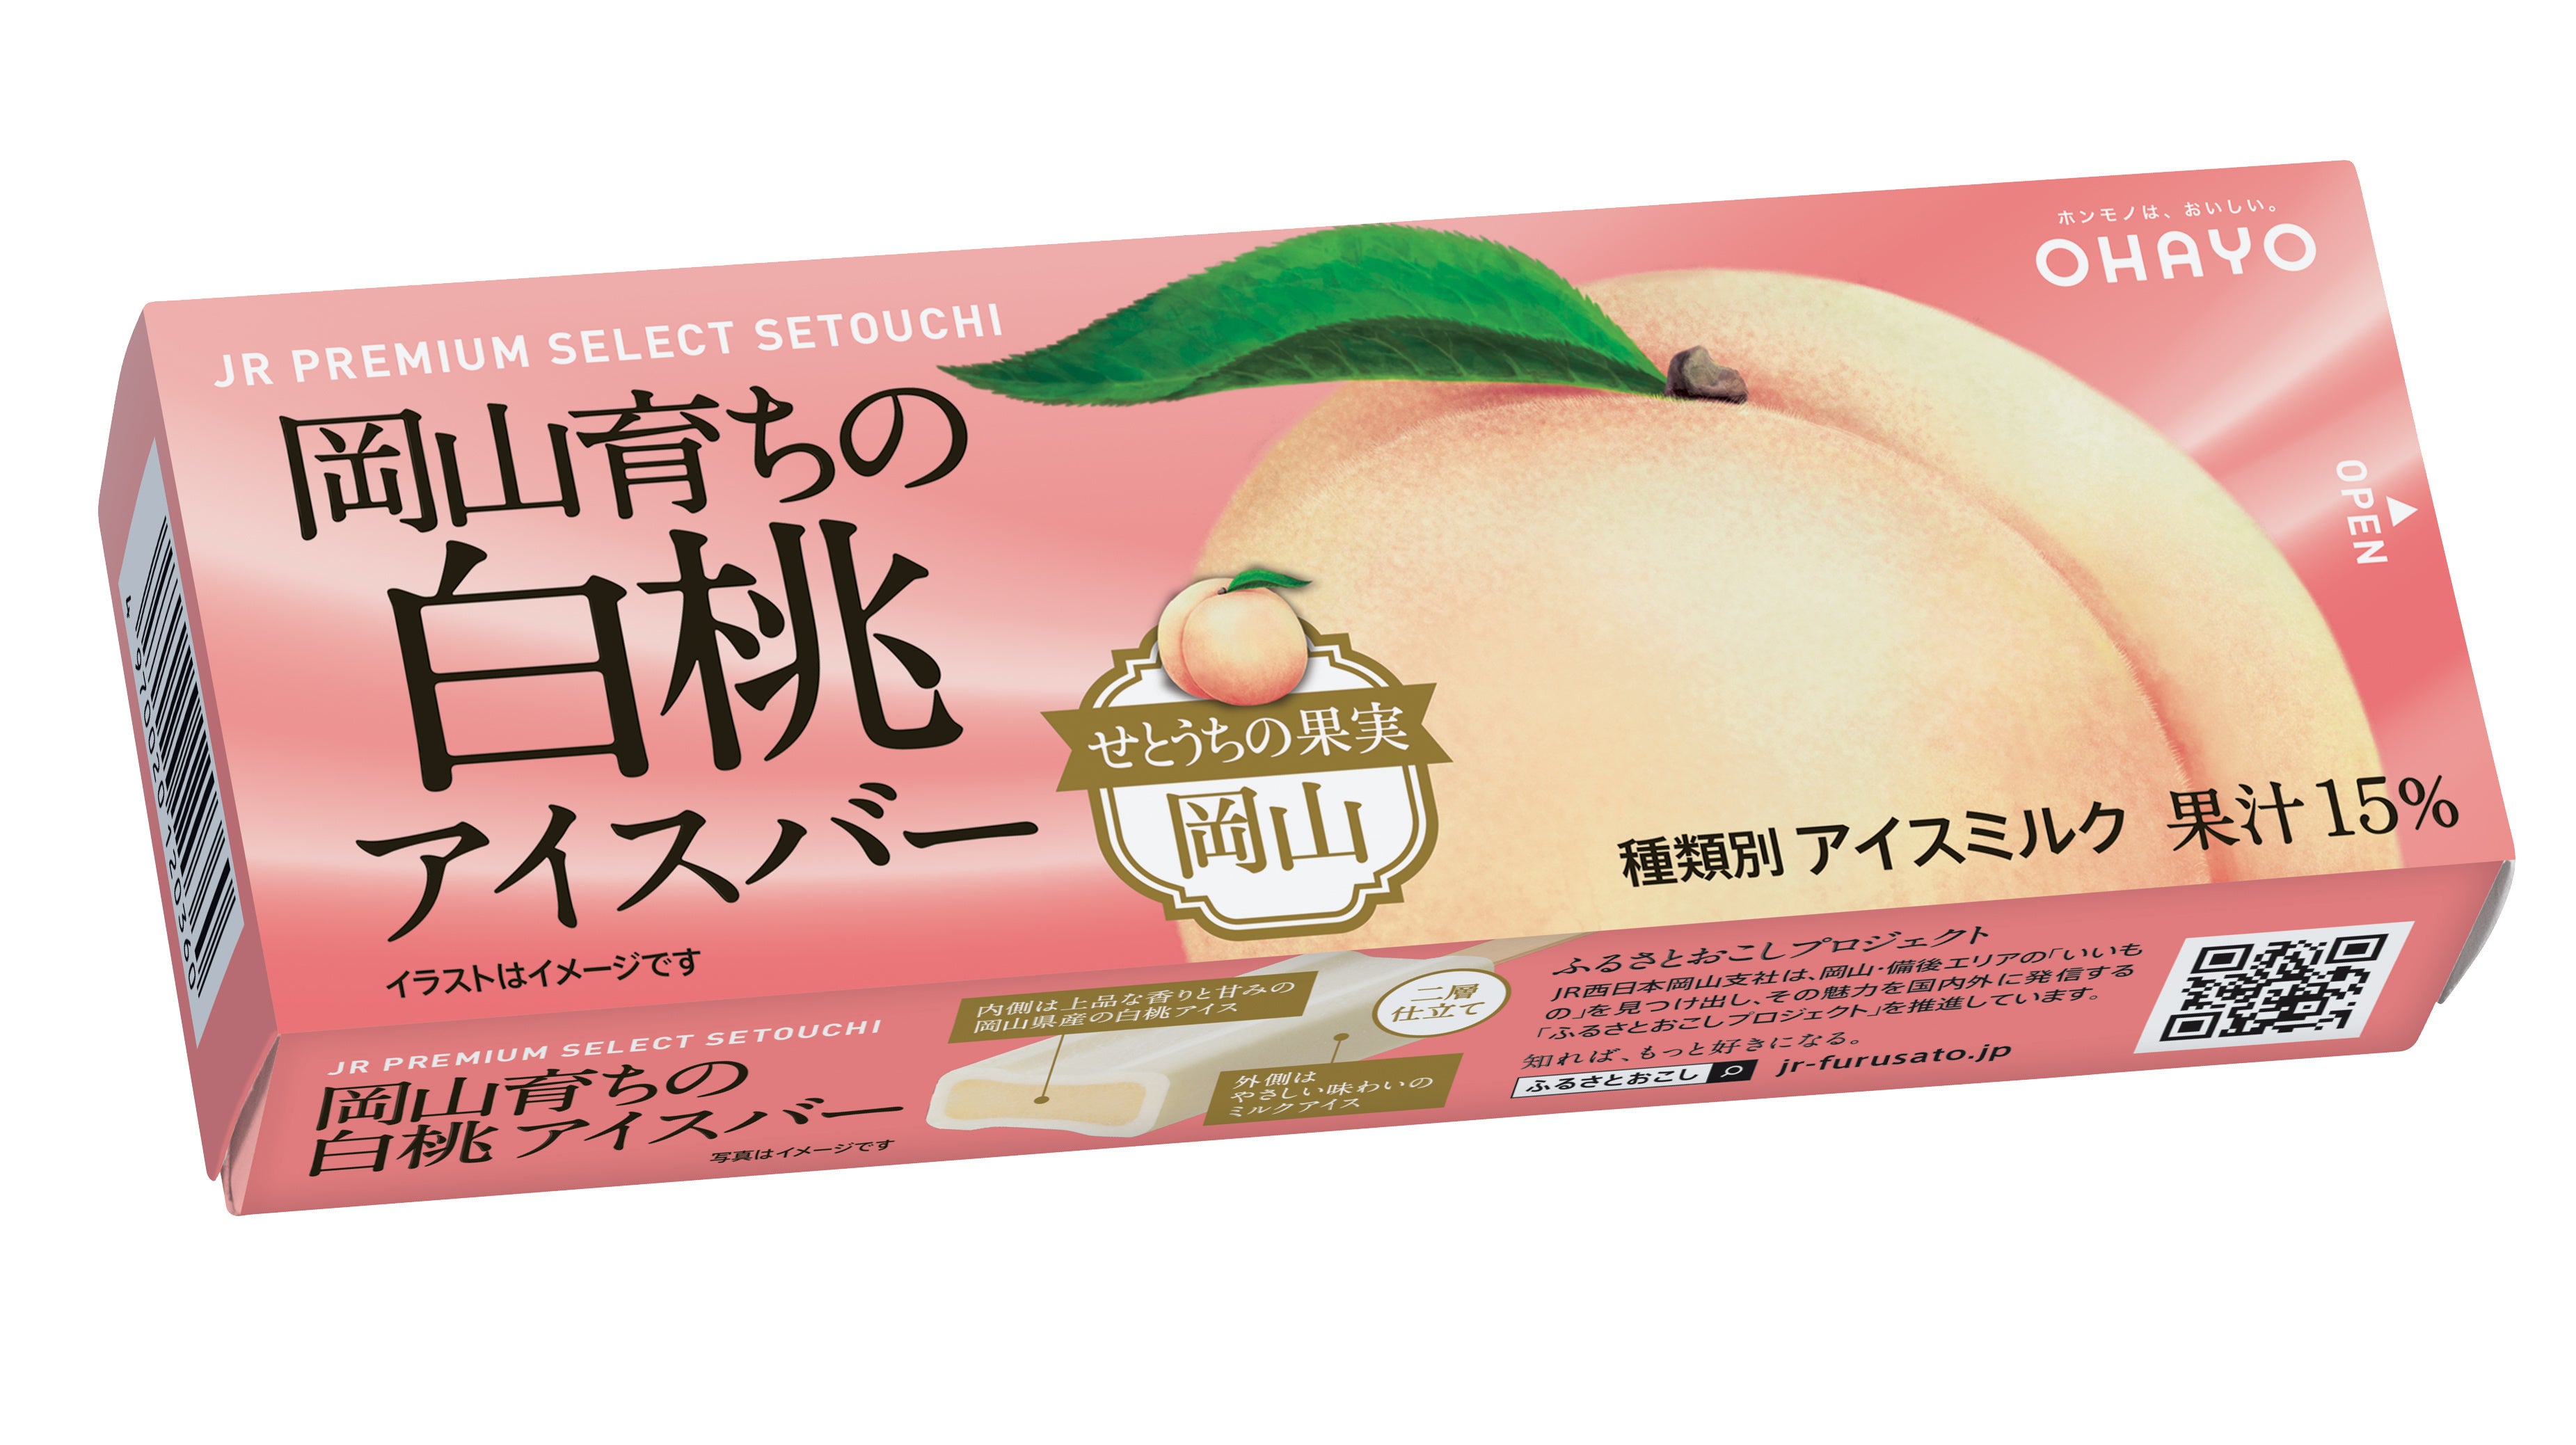 JR PREMIUM SELECT SETOUCHIシリーズ「岡山育ちの白桃アイスバー」を今年も発売！